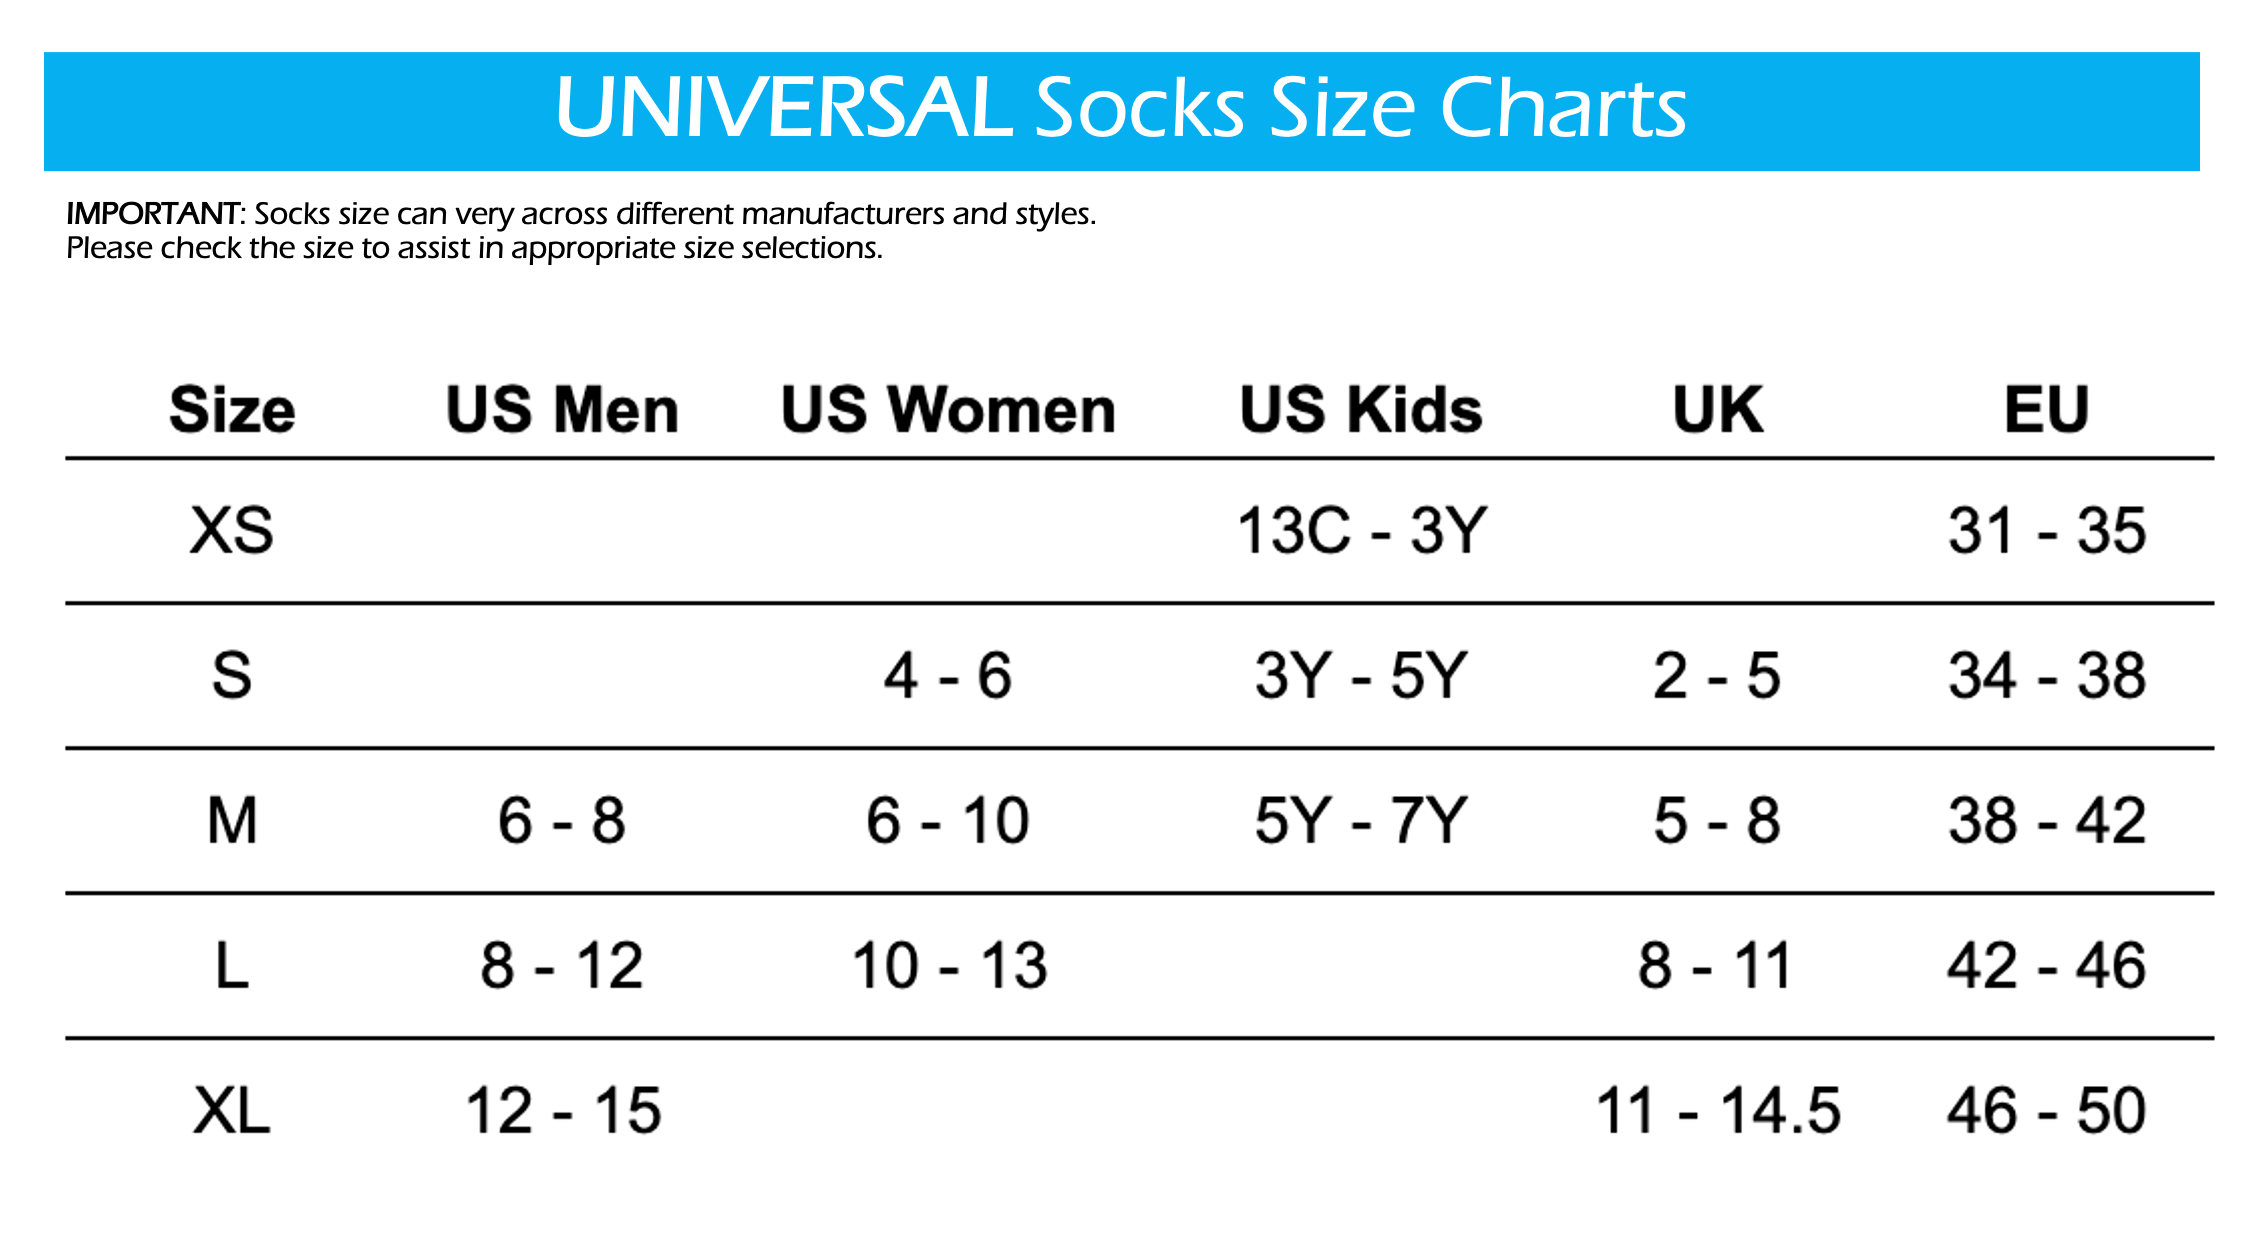 Skechers Women's No Show Liner Socks 8 Pairs - Black/White/Grey - Shoe Size 5-9.5